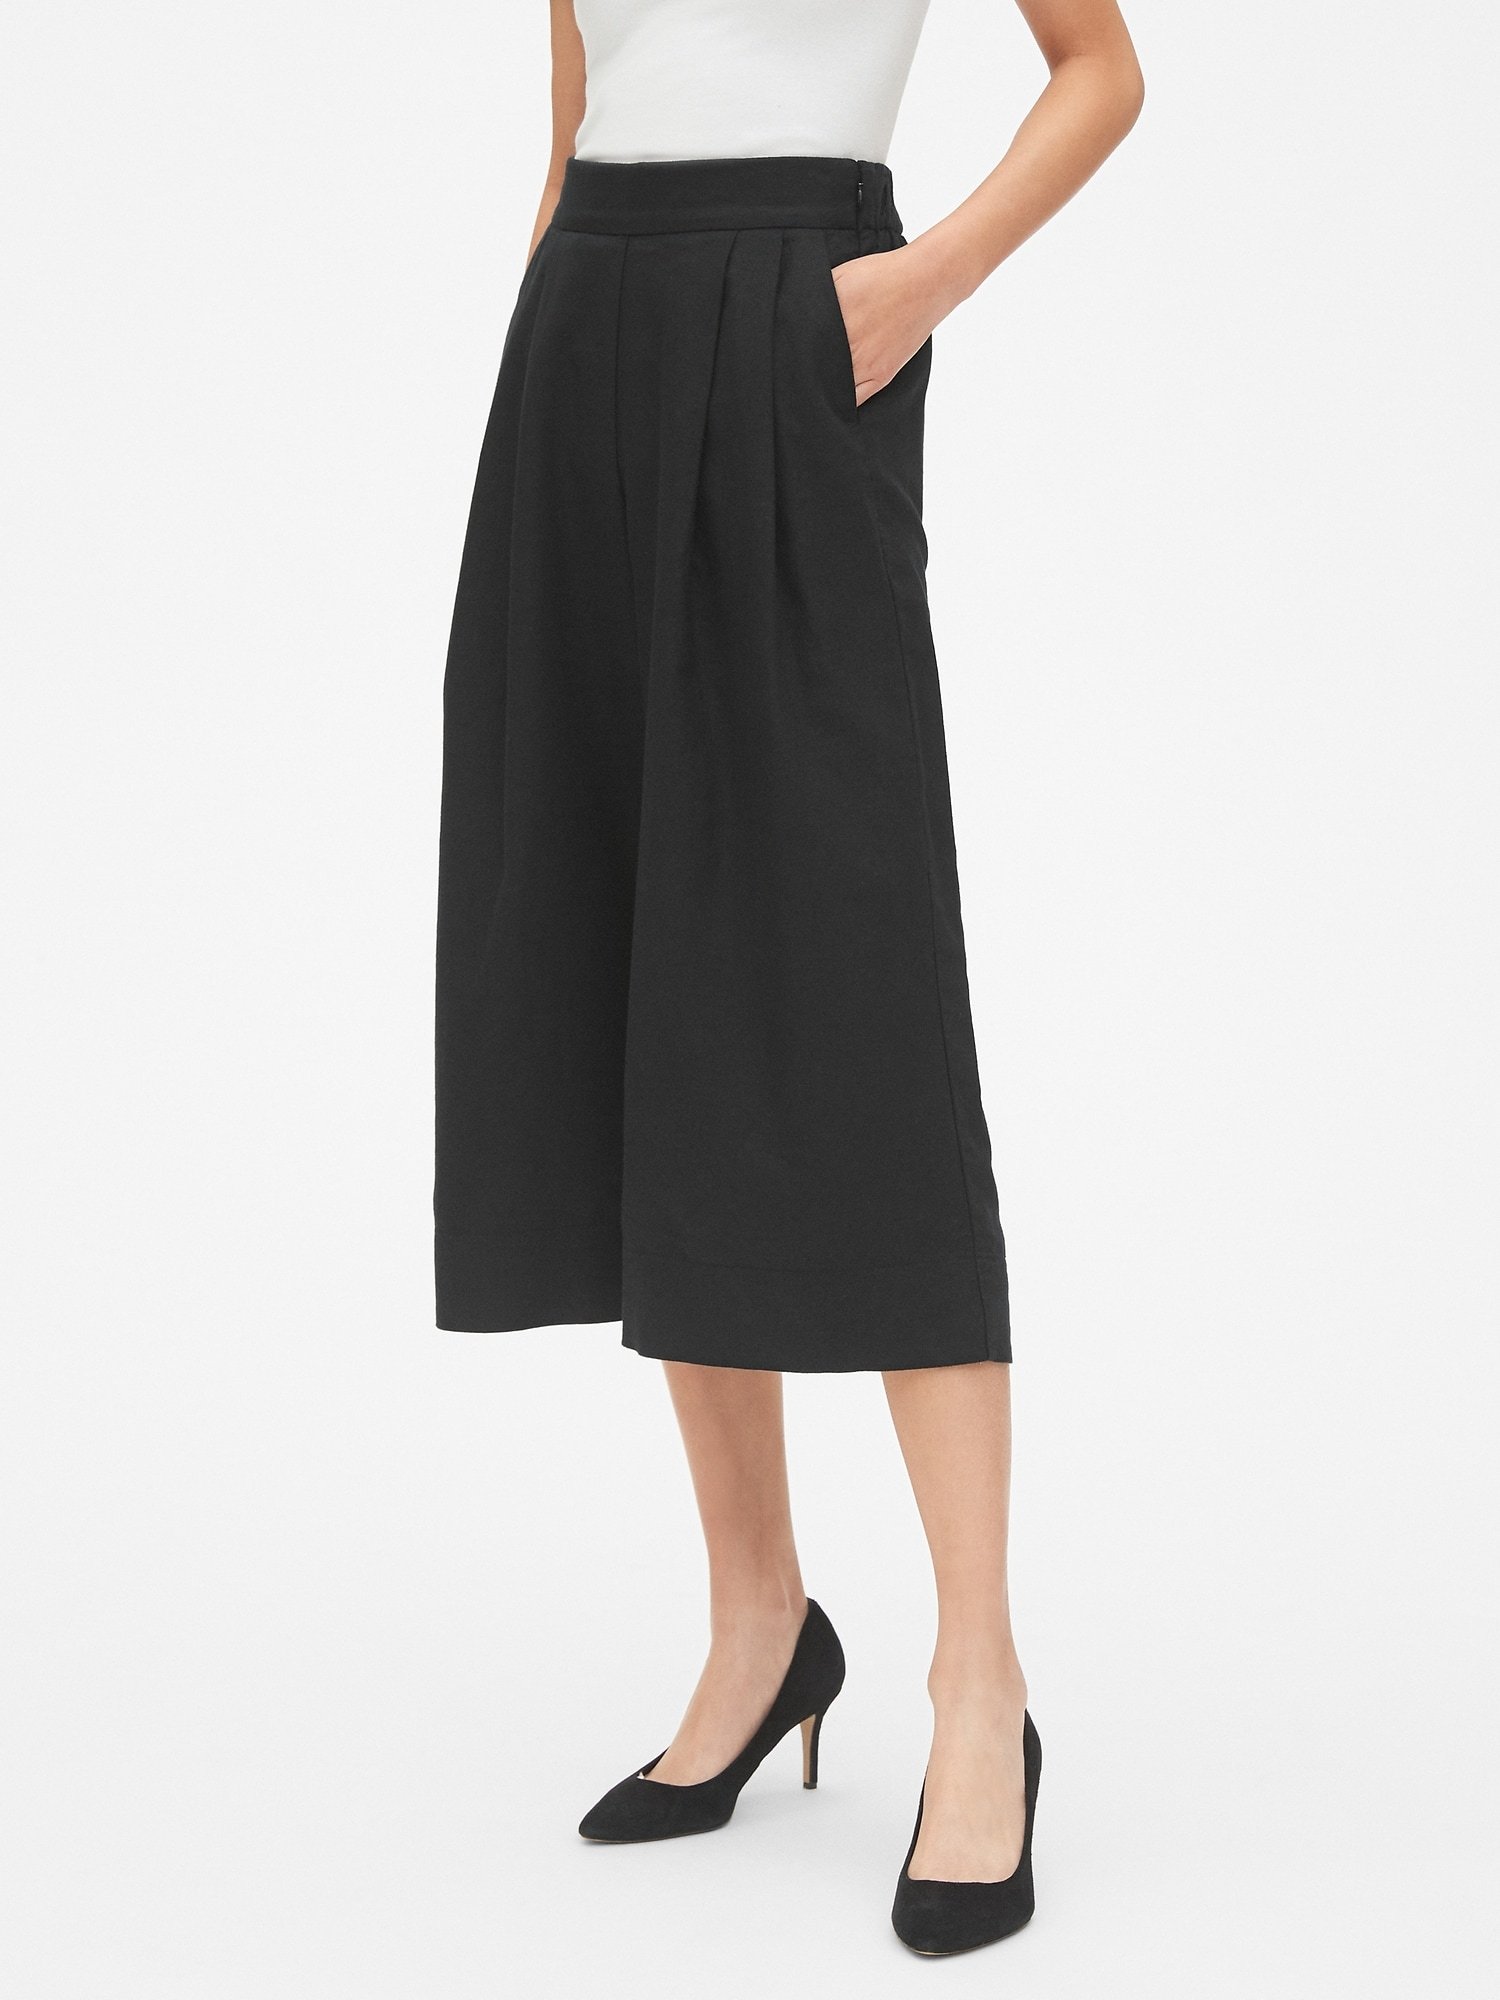 Kadın Yüksek Bel Wide Fit Kısa Pantolon product image